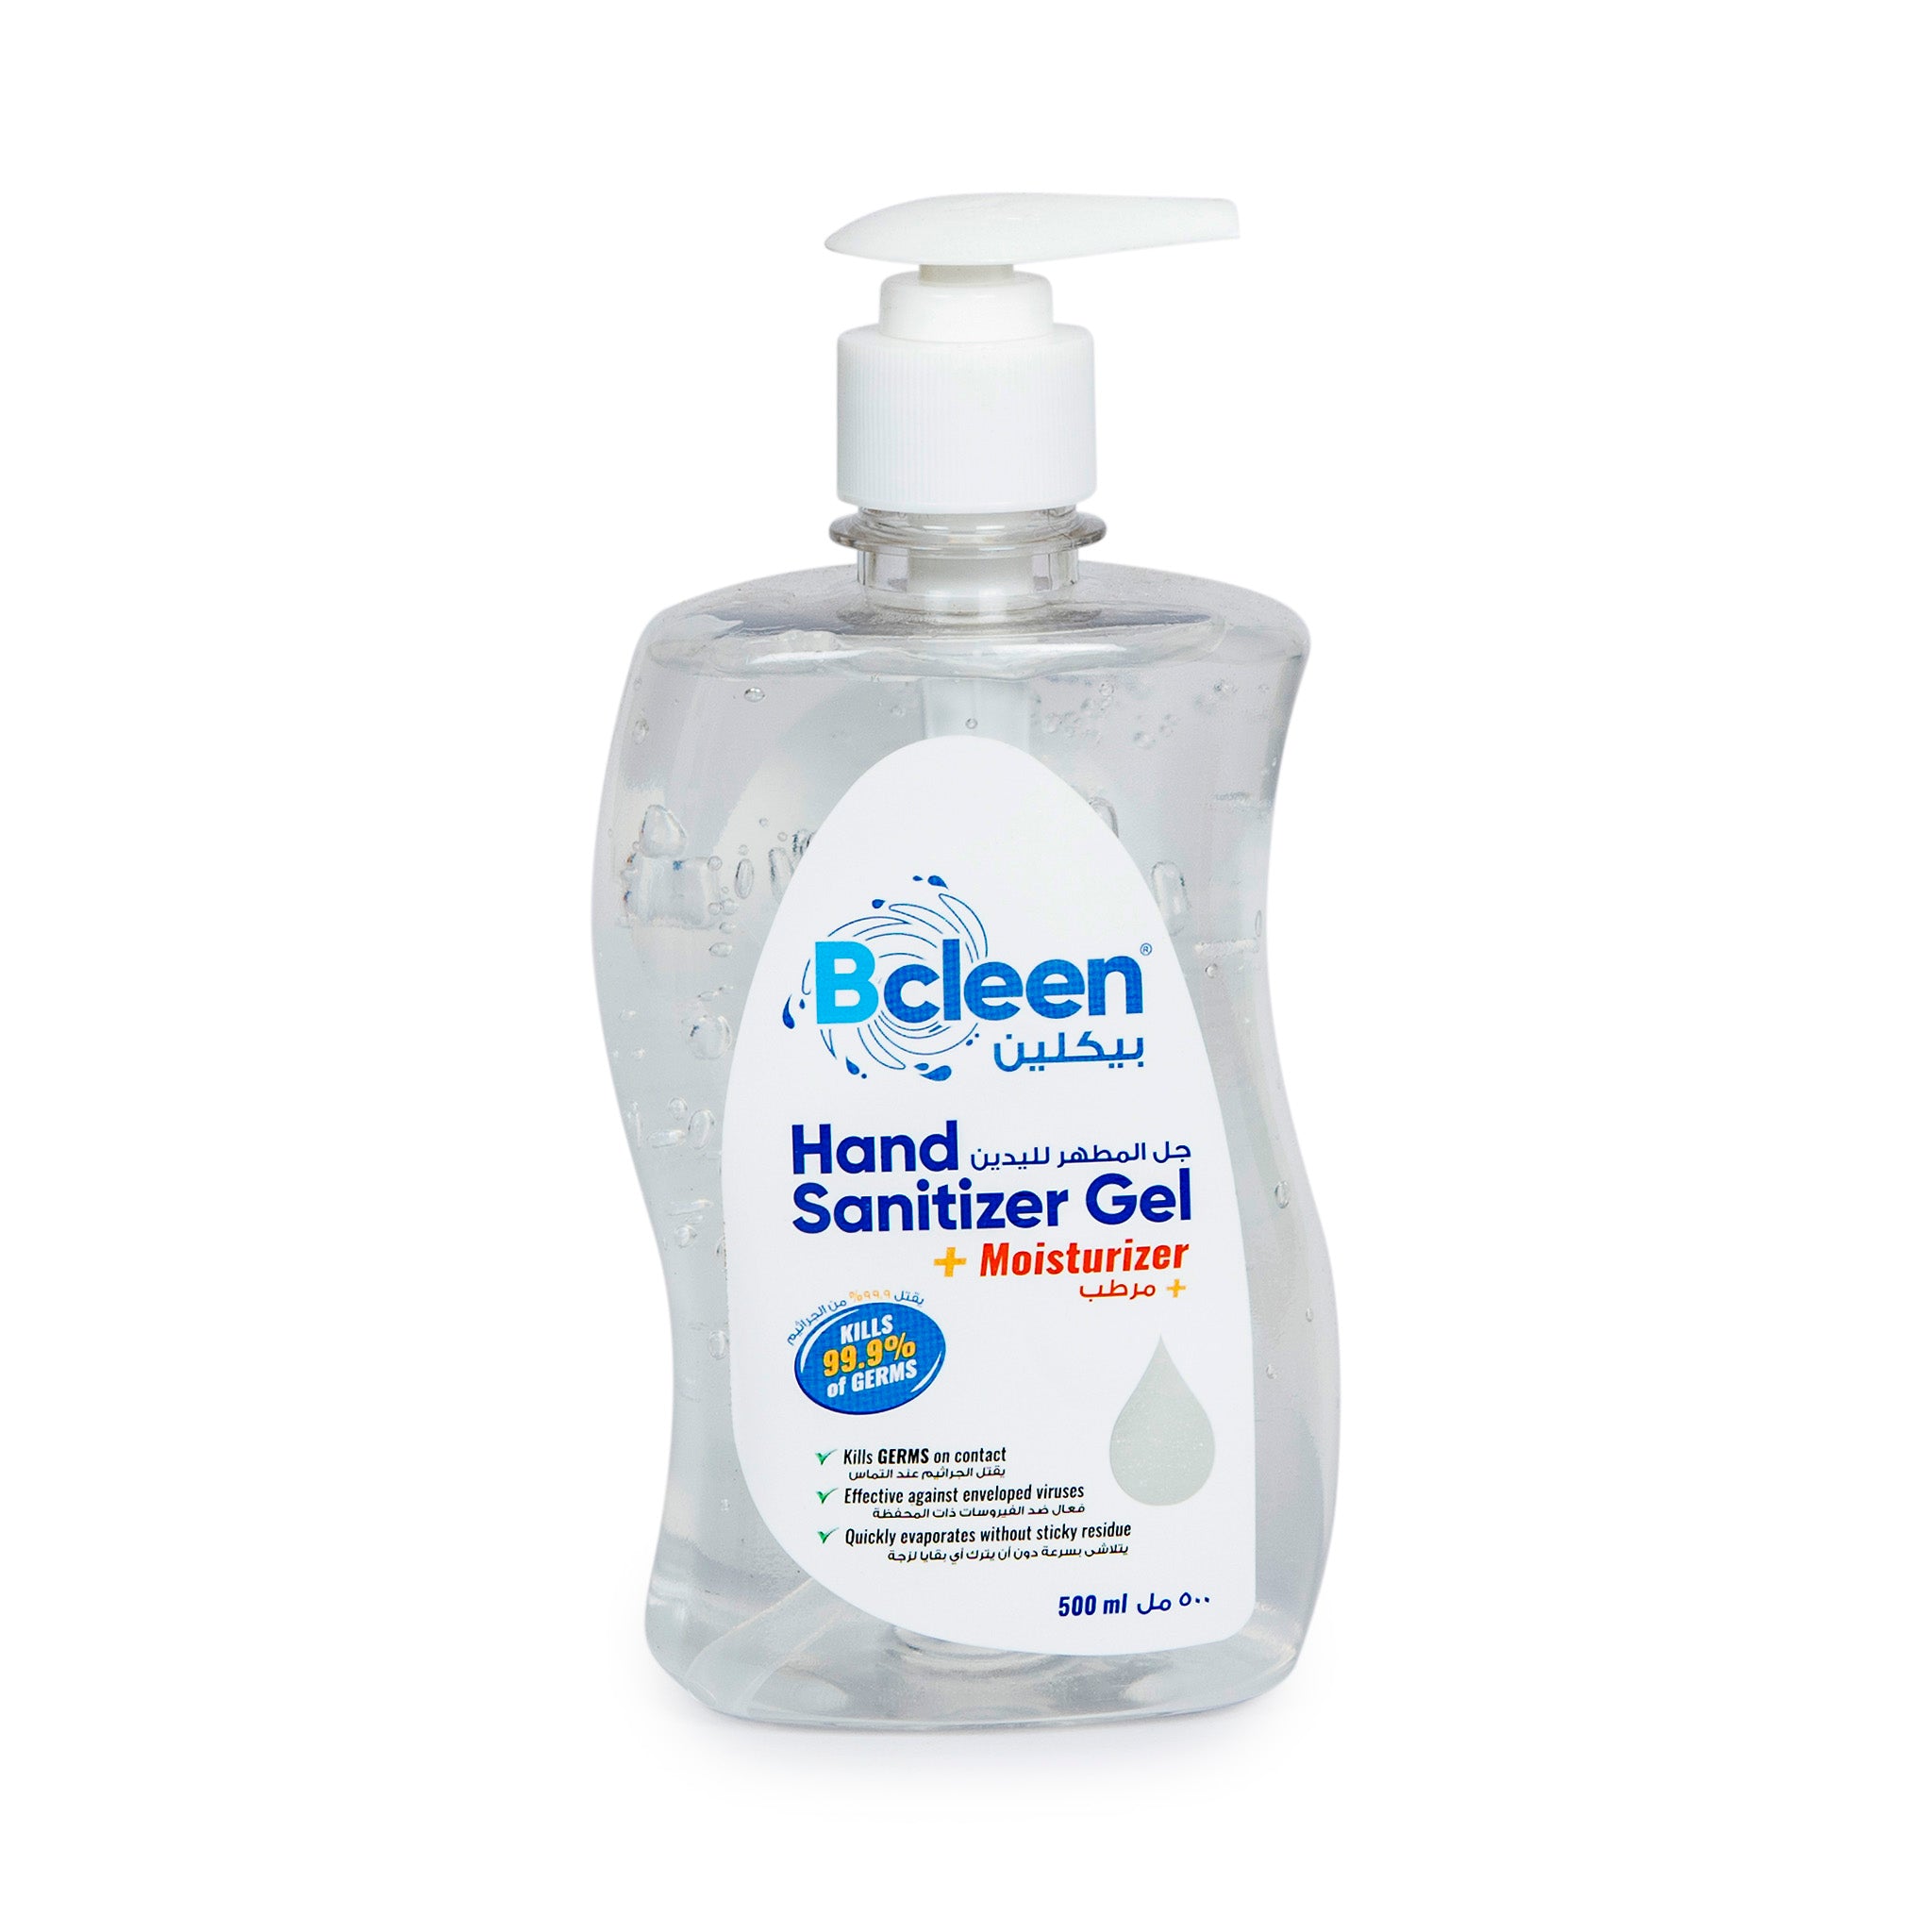 Bcleen® Hand Sanitizer Gel with 70% Ethyl Alcohol, 500 ml Pump Bottle